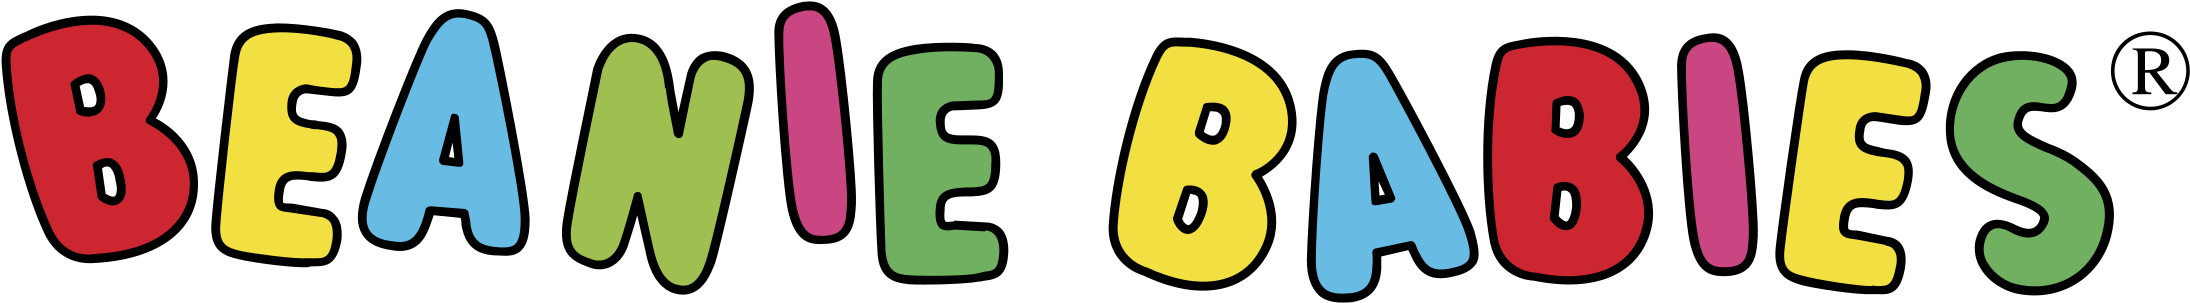 Beanie Babies 04 Logo Png Transparent - Beanie Babies (2400x2400), Png Download